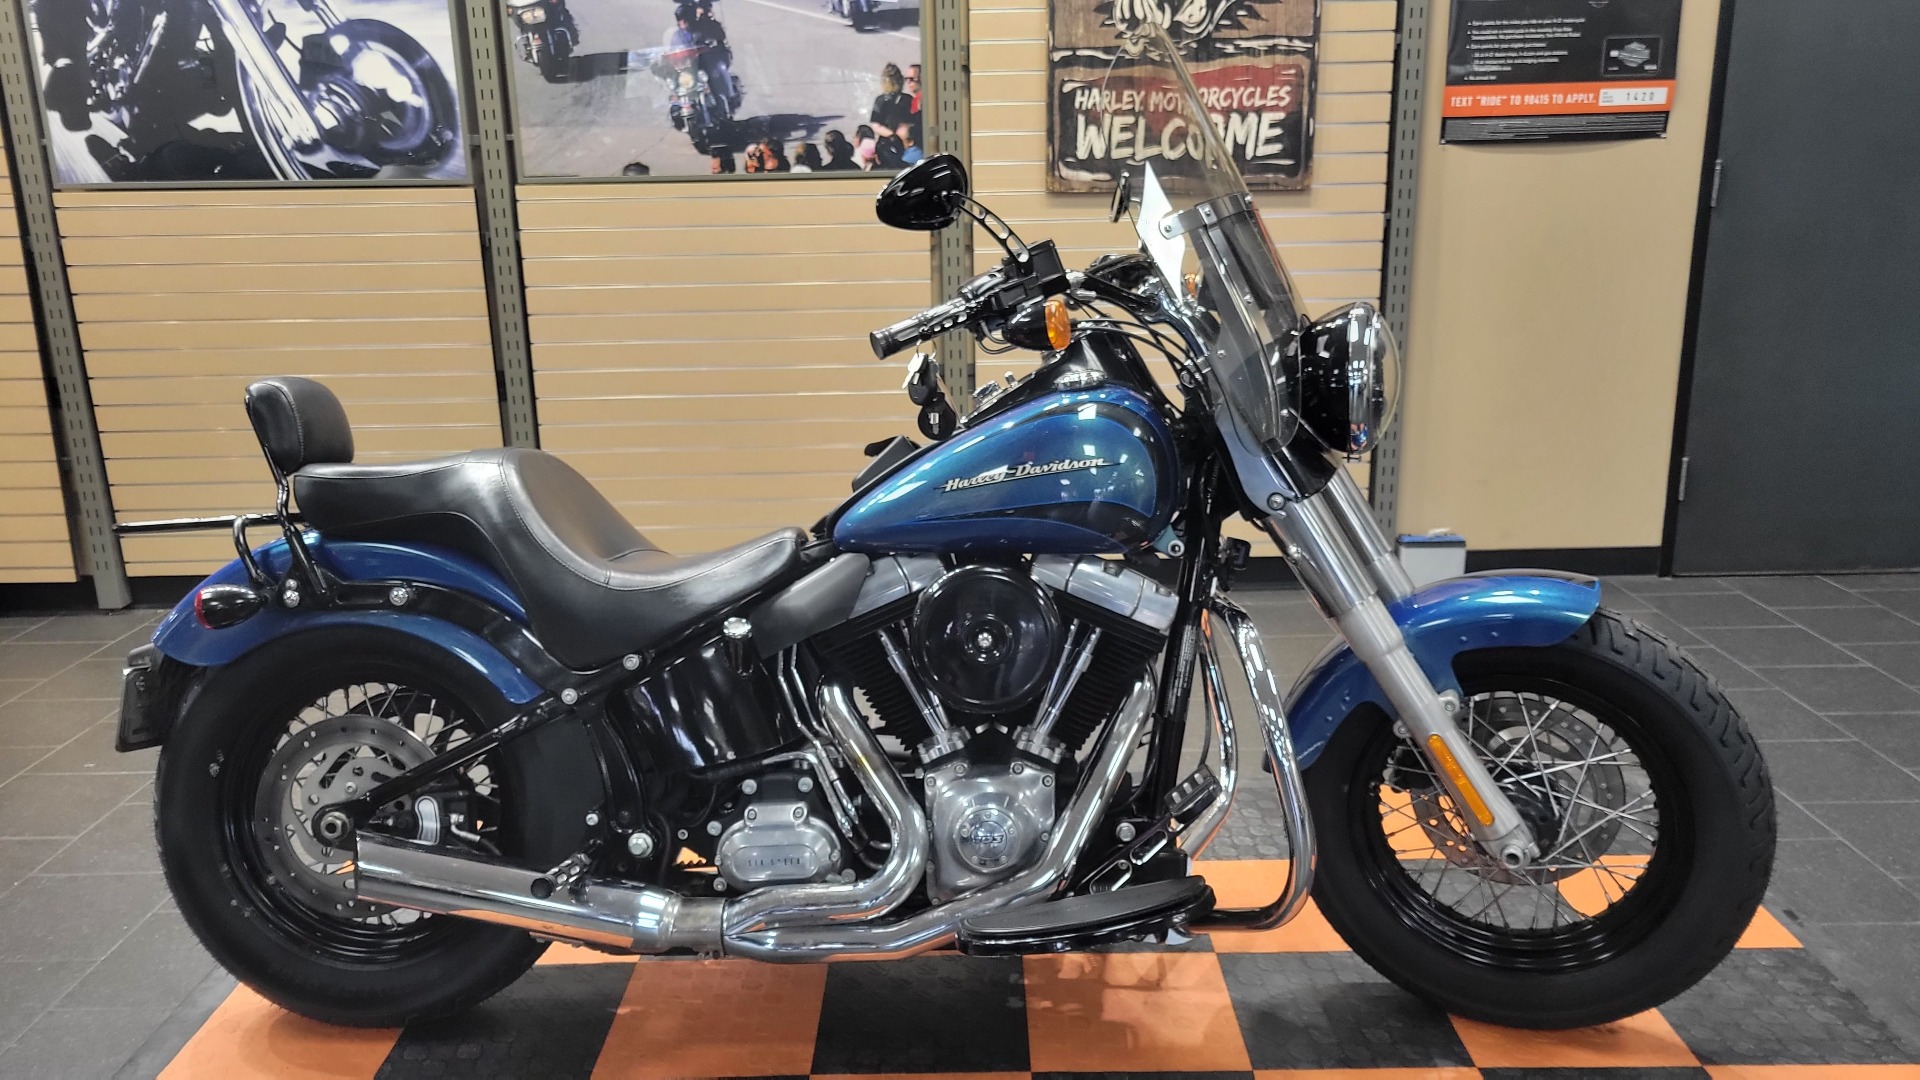 2014 Harley-Davidson Softail Slim® in The Woodlands, Texas - Photo 1